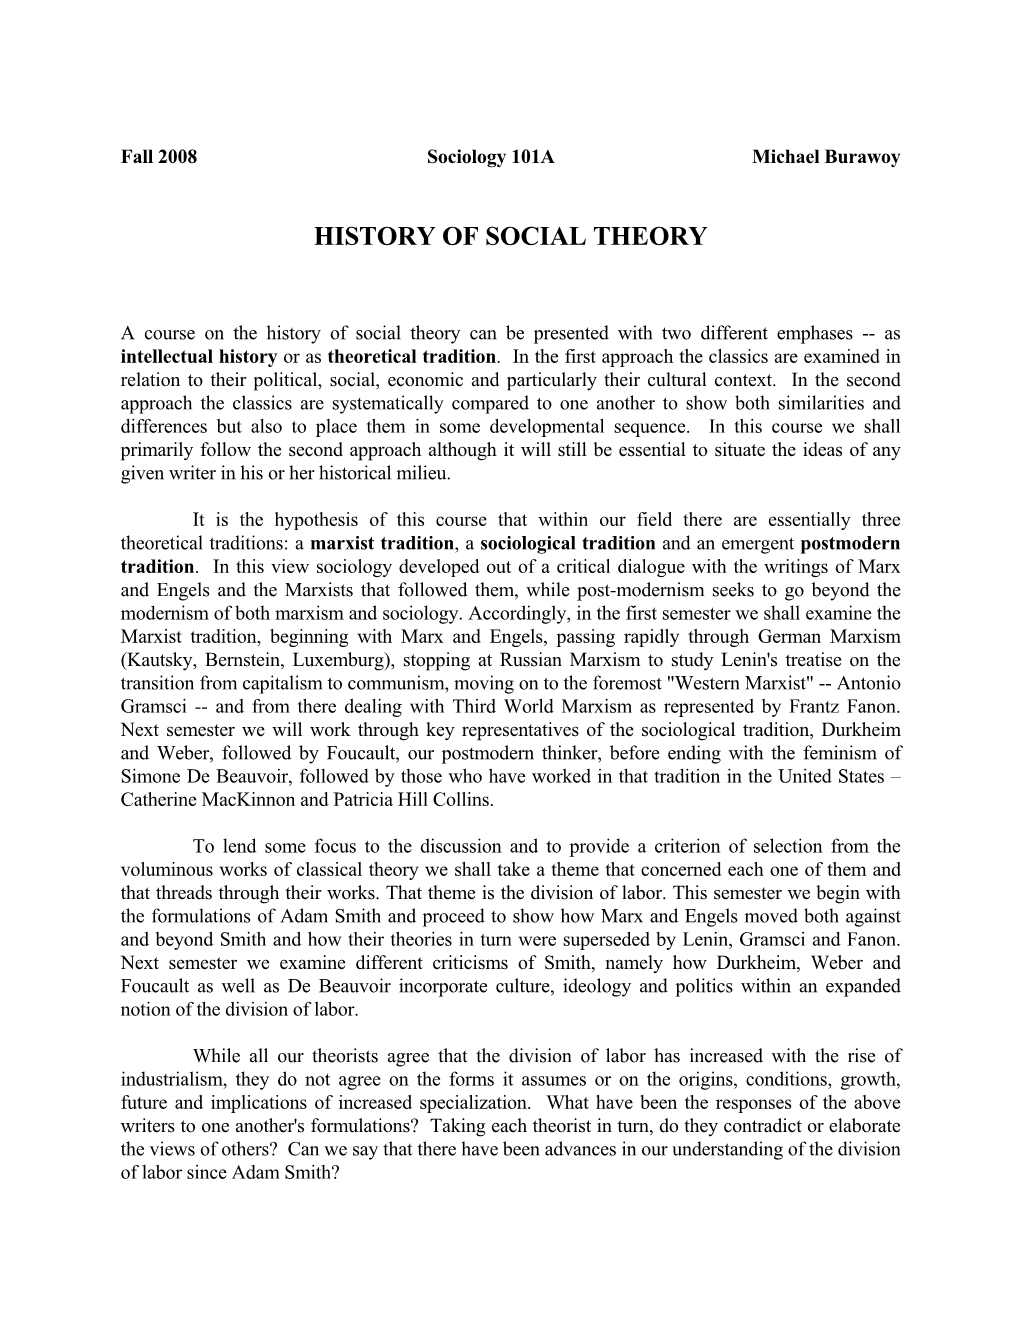 History of Social Theory